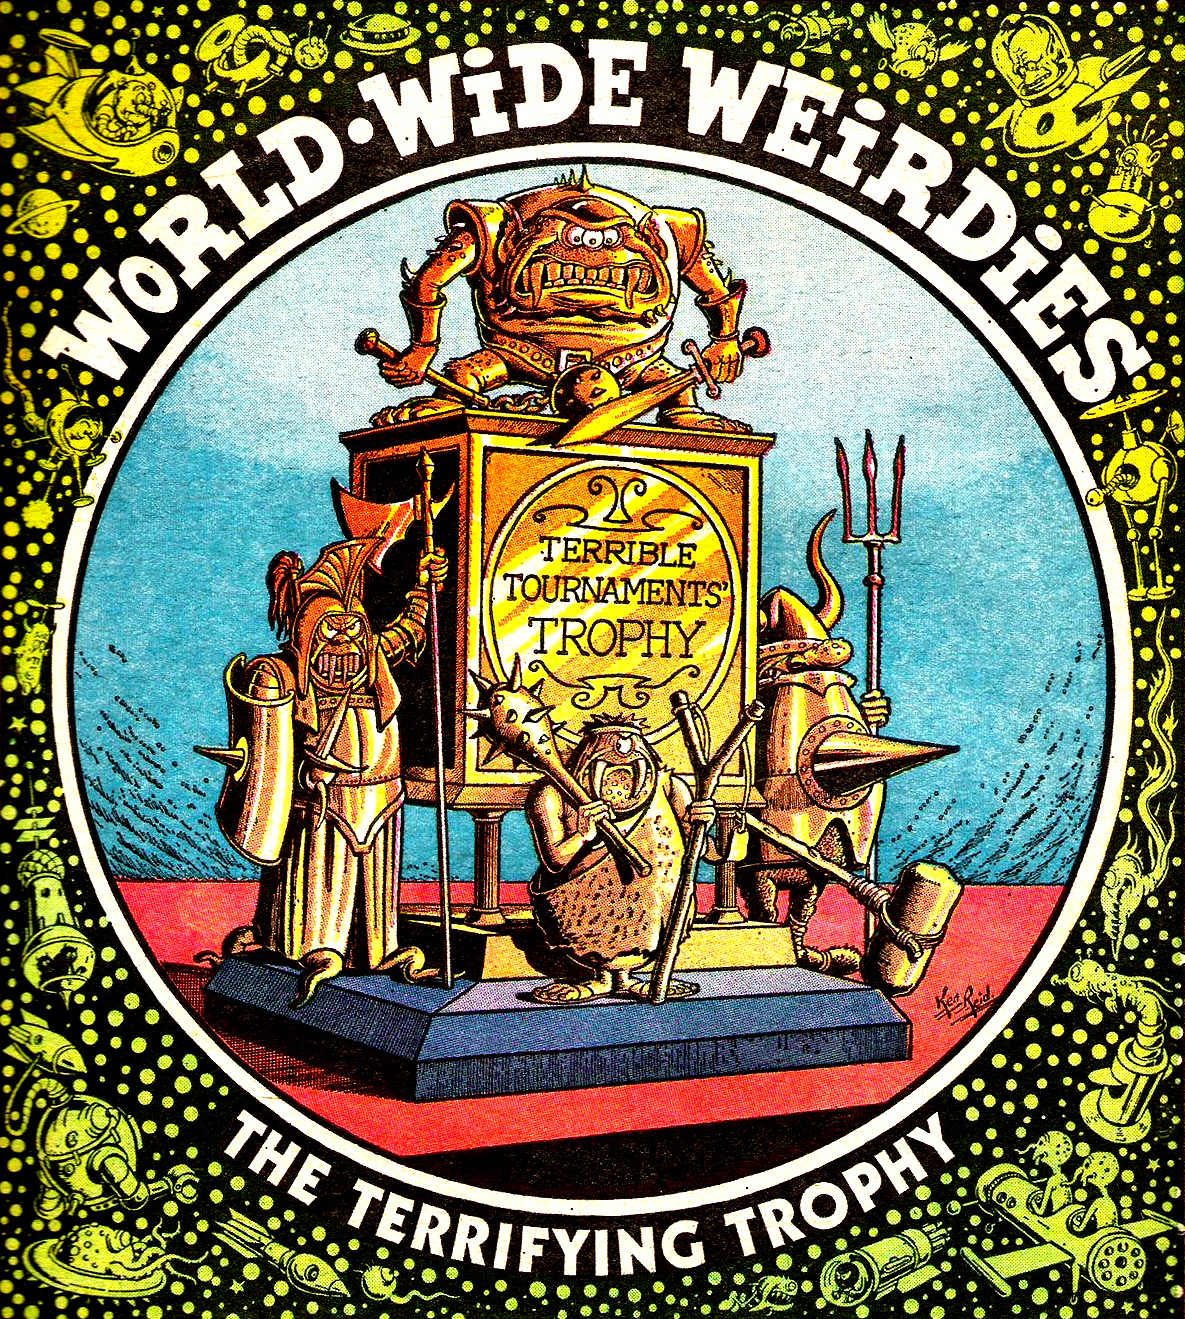 Ken Reid - World Wide Weirdies 45